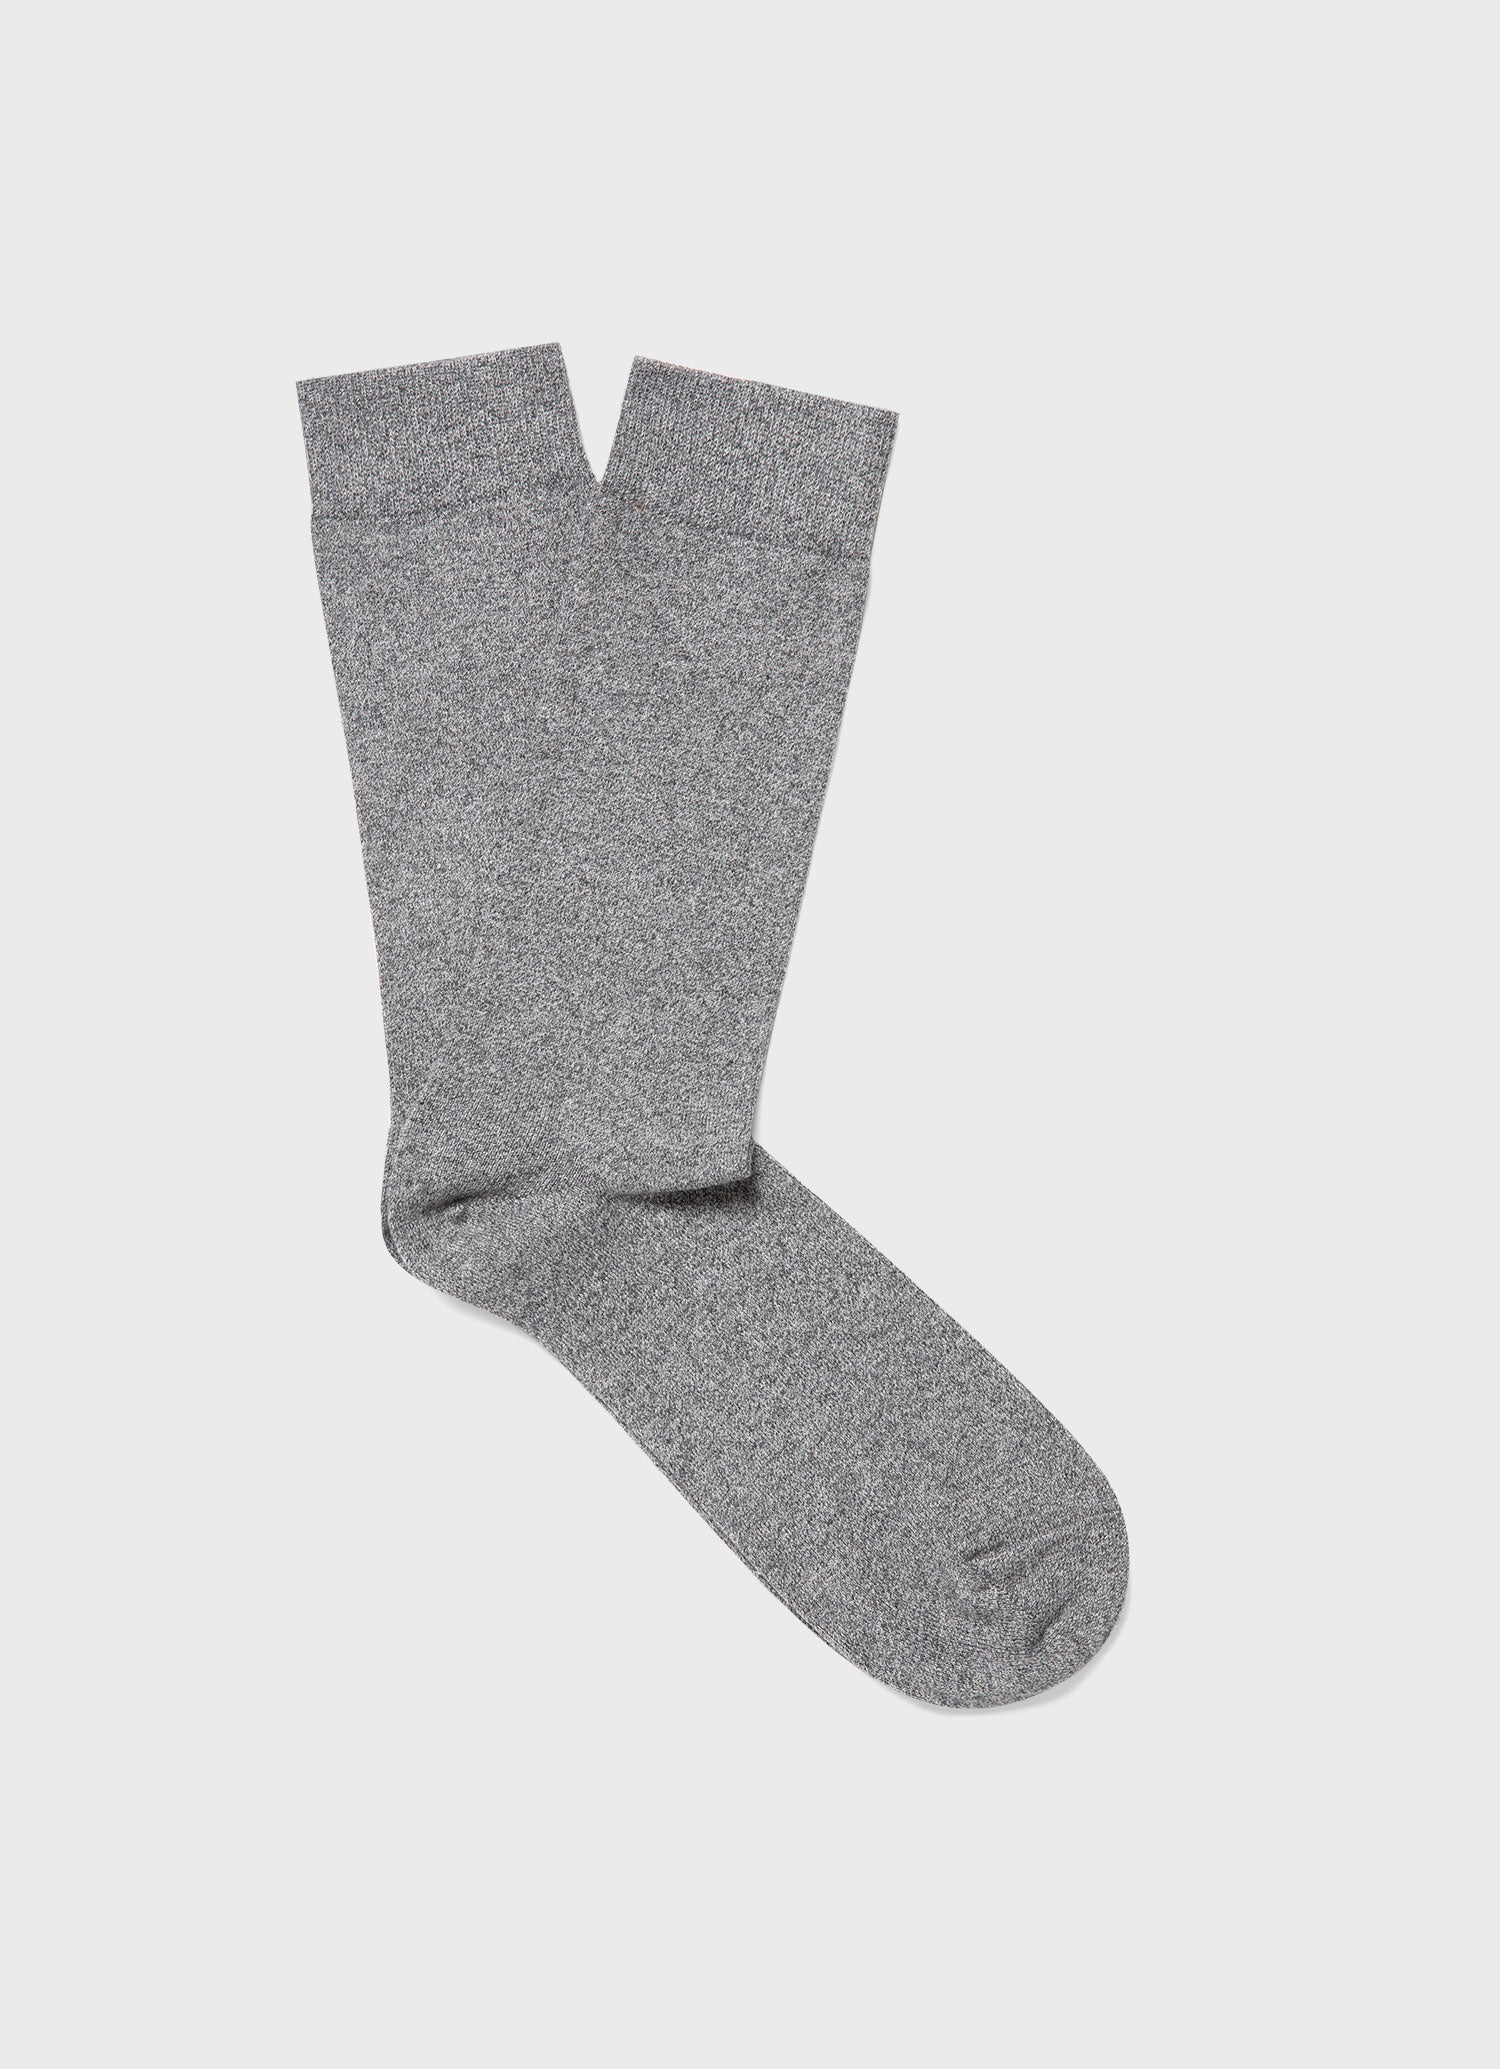 Men's Cotton Socks in Pale Grey